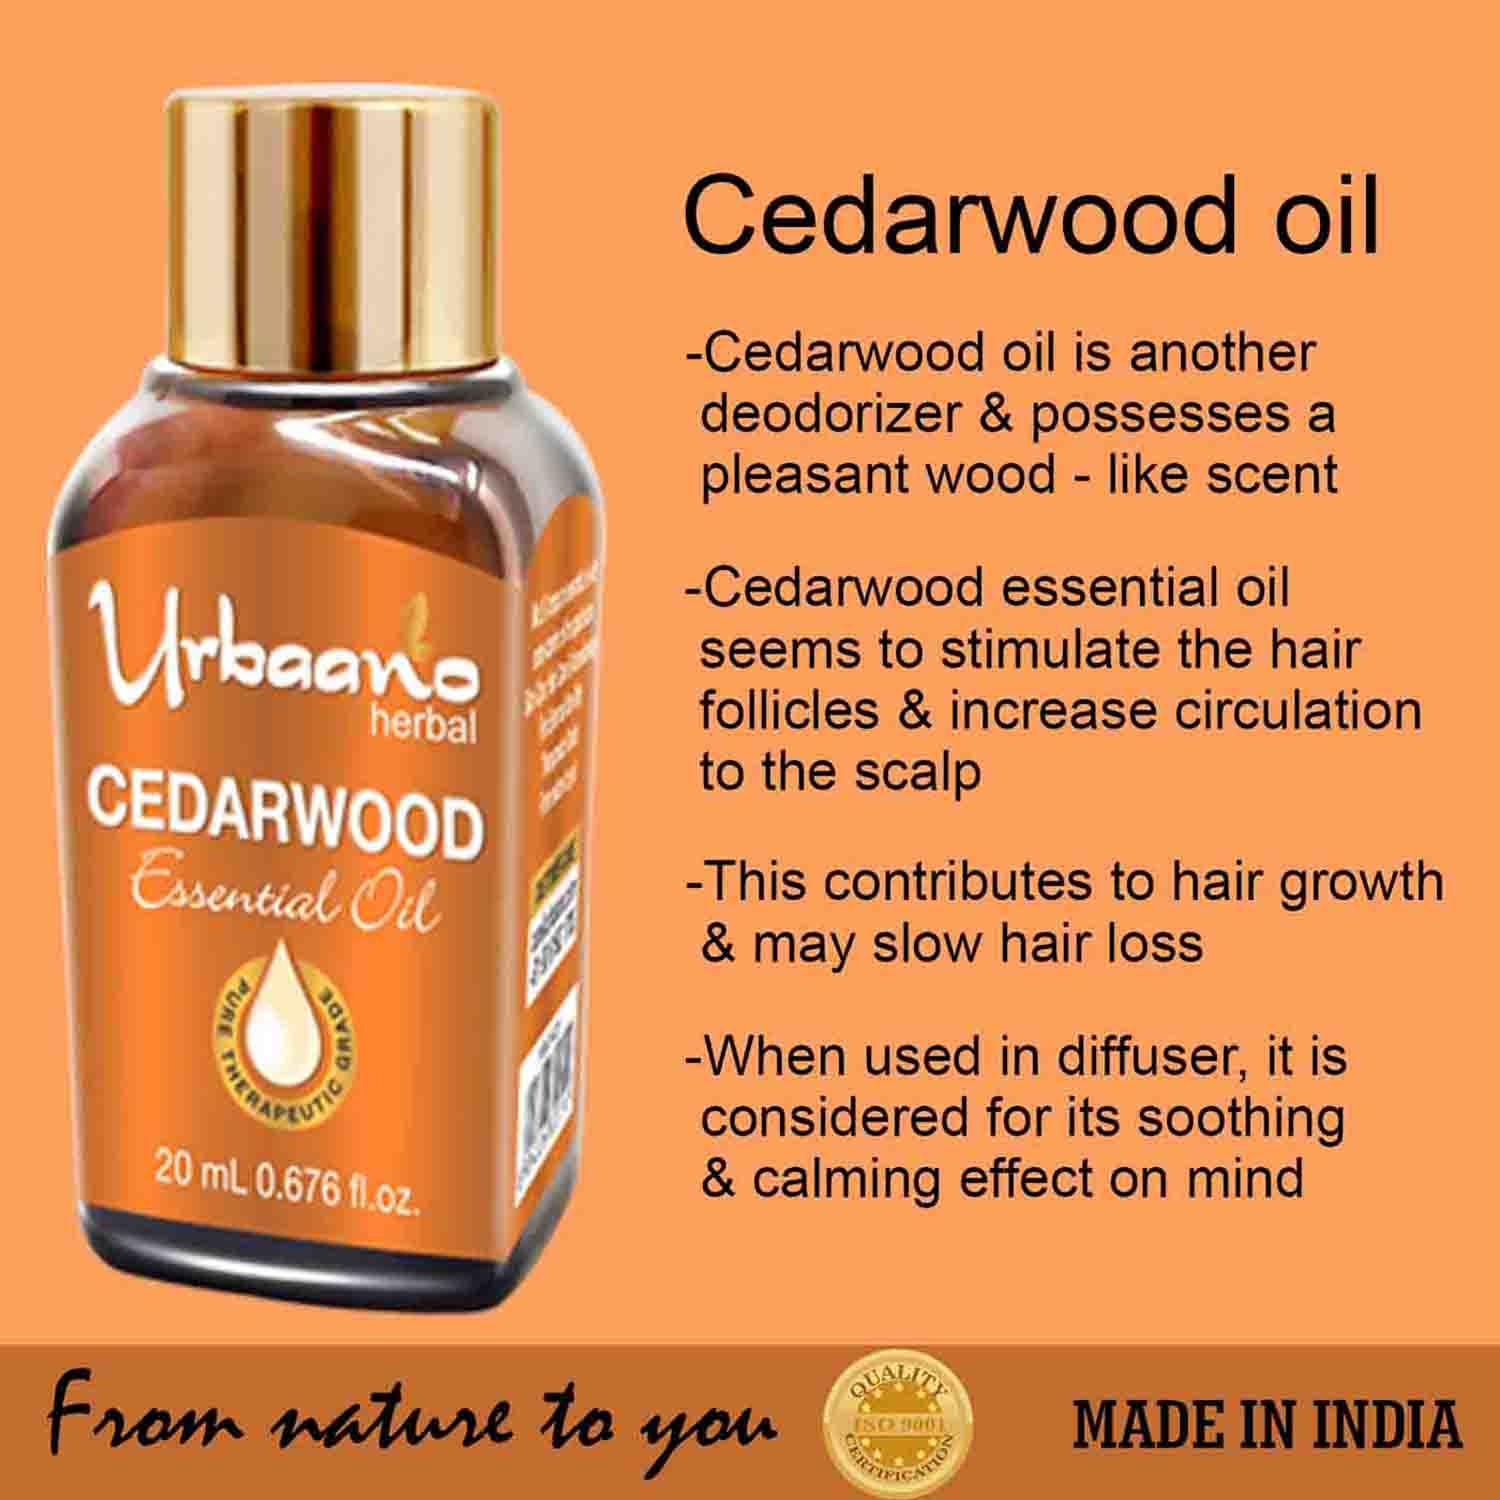 Urbaano Herbal | Urbaano Herbal Cedarwood Essential Oil for Aromatherapy natural & Pure -20ml 2